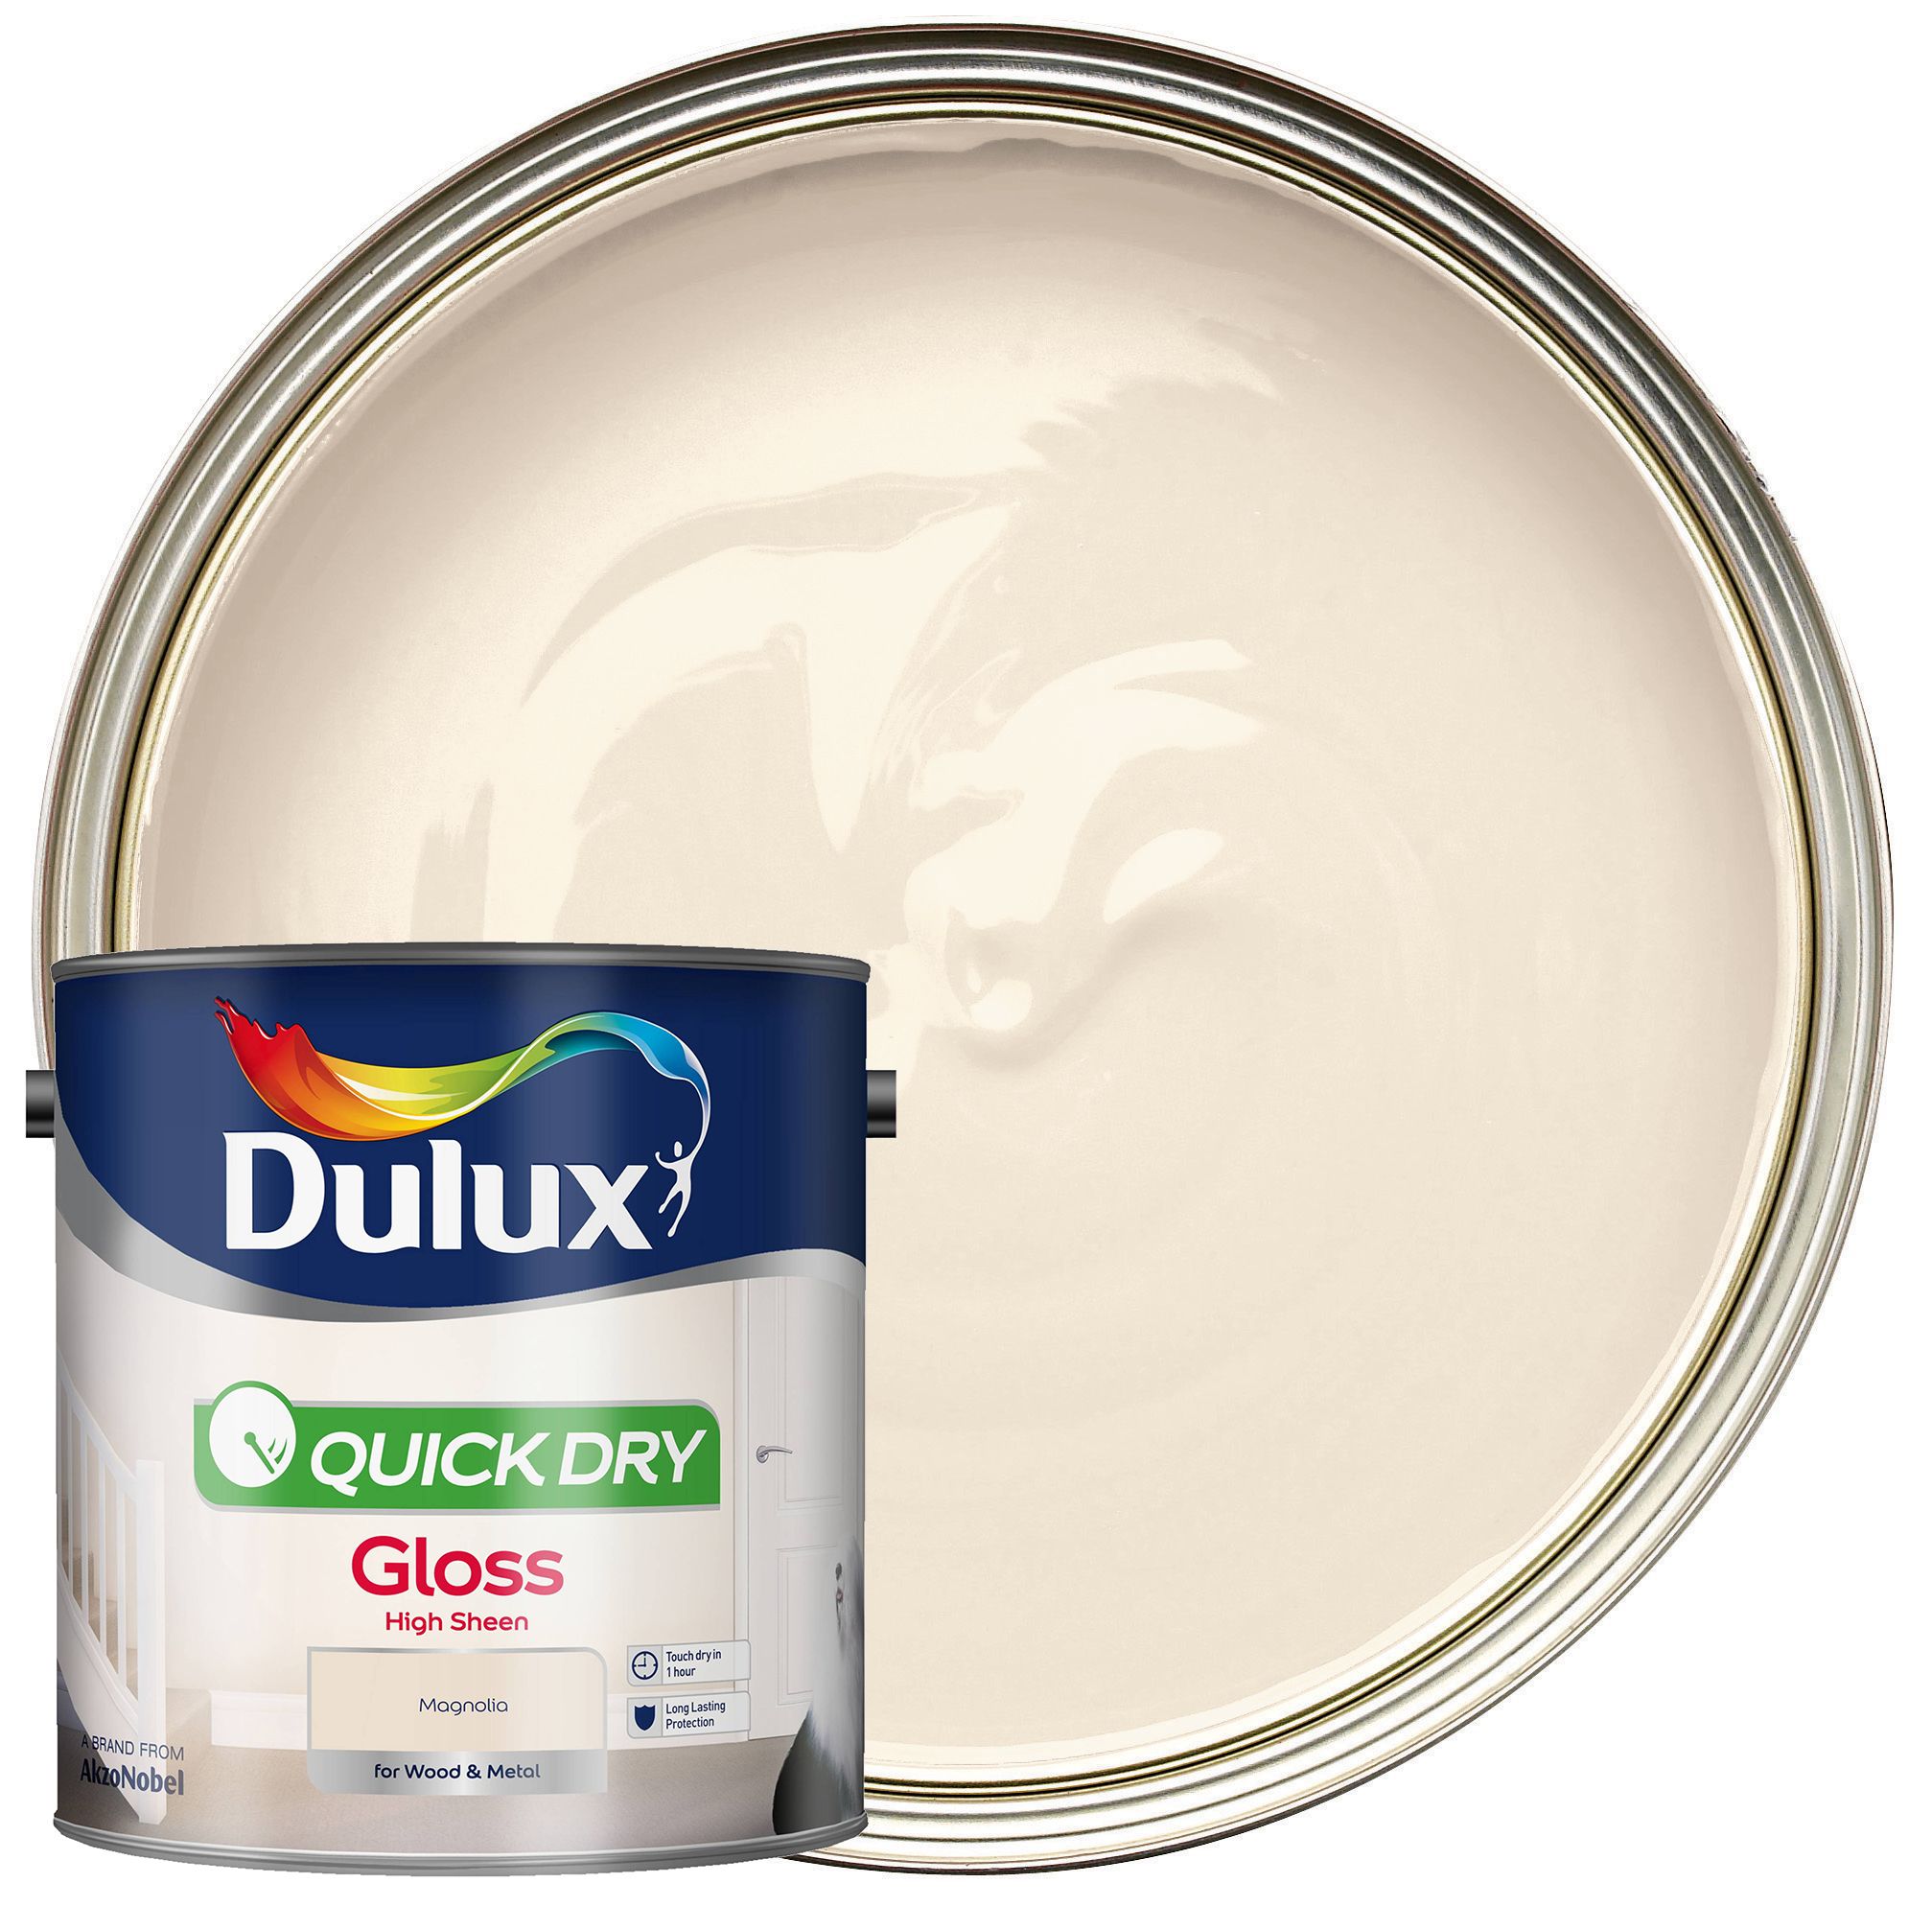 Image of Dulux Qd Gloss Magnolia 2.5L